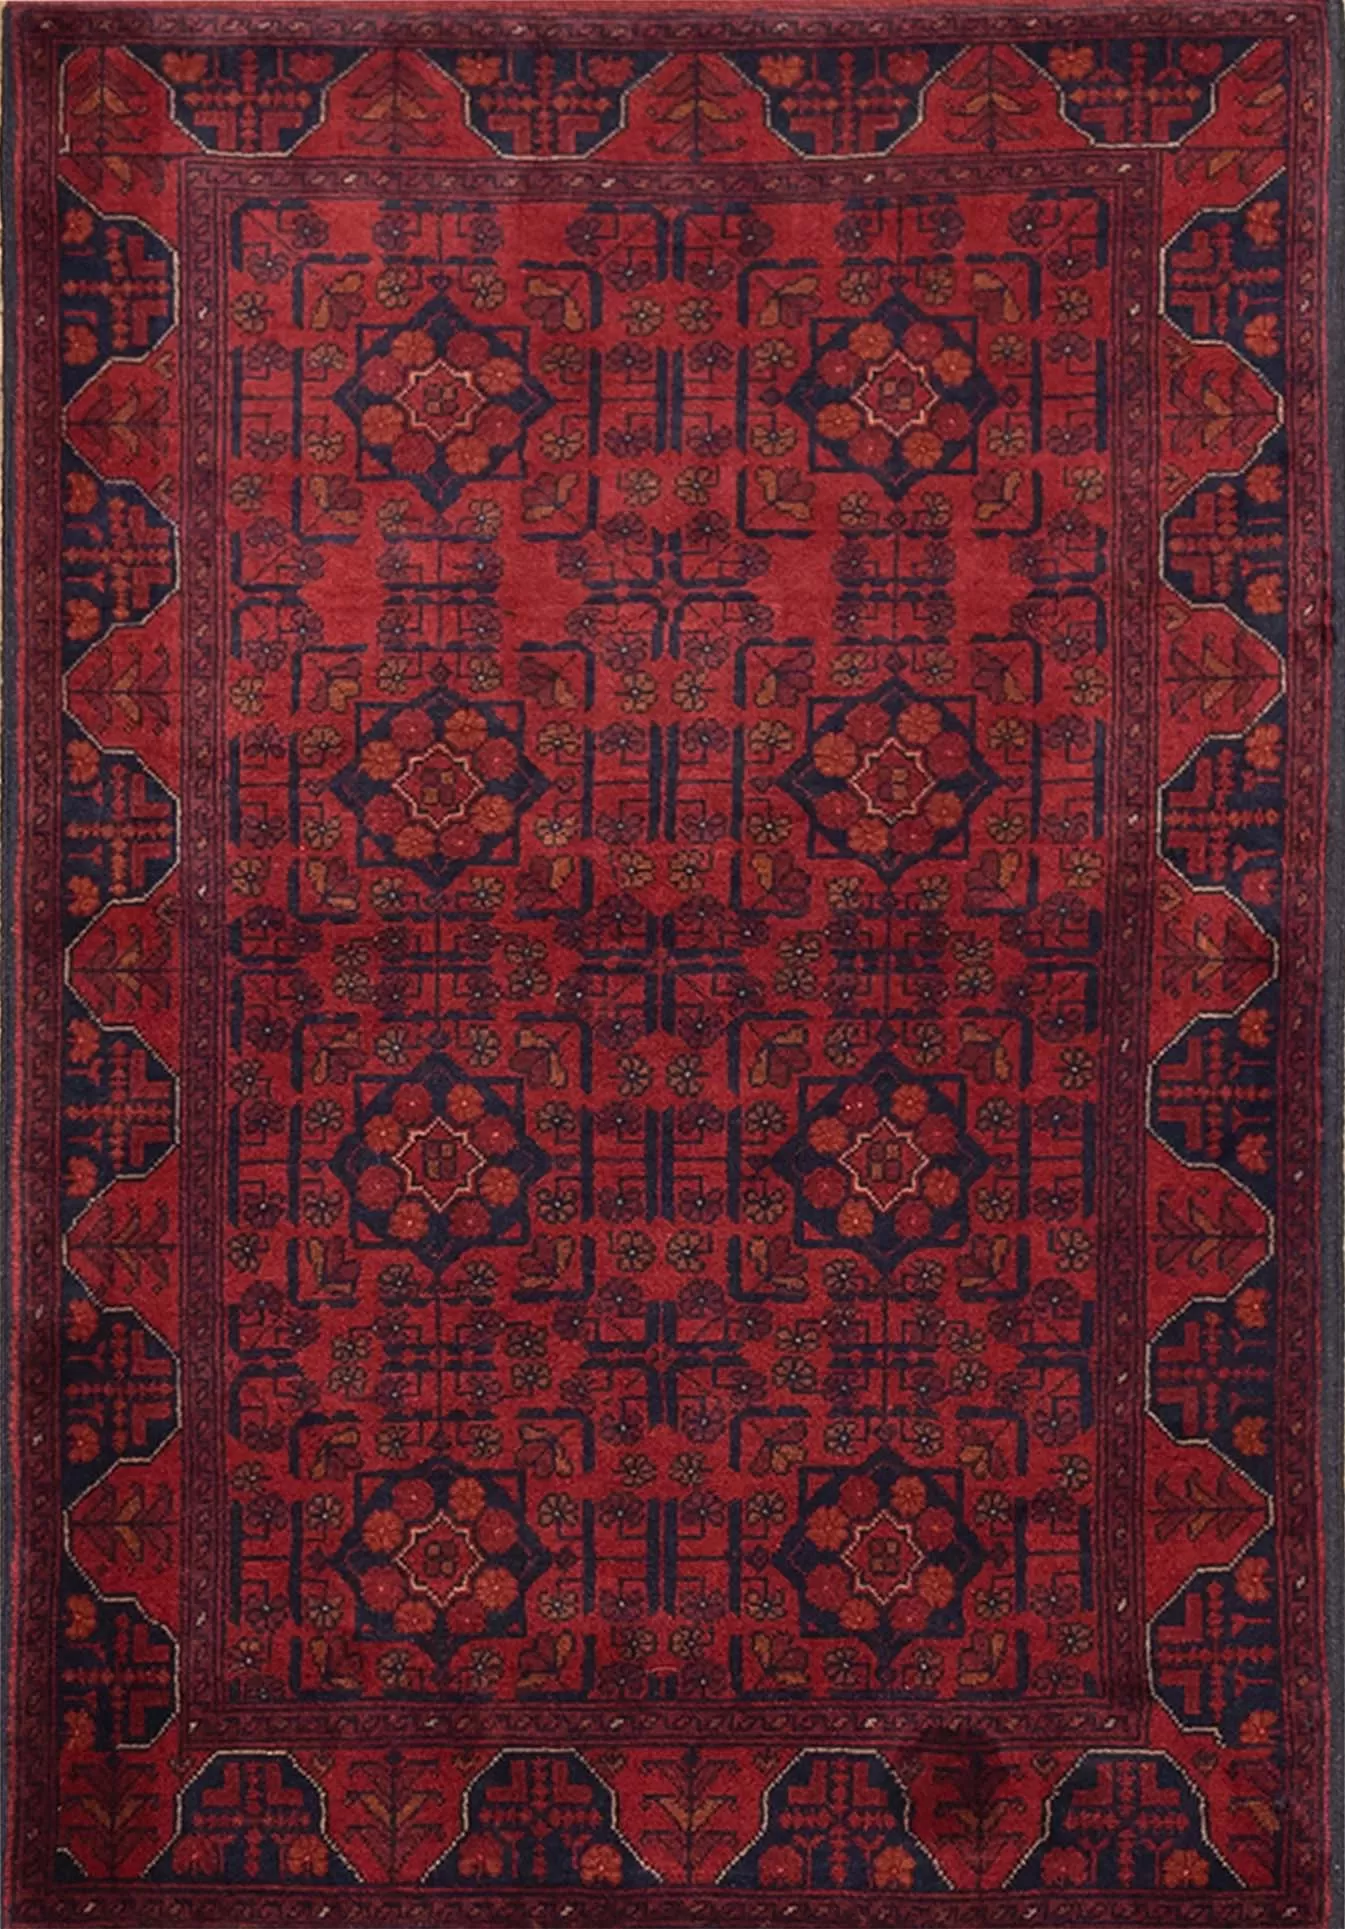 Handmade Afghan tribal wool rug in red color. Size 3.6x5.1.